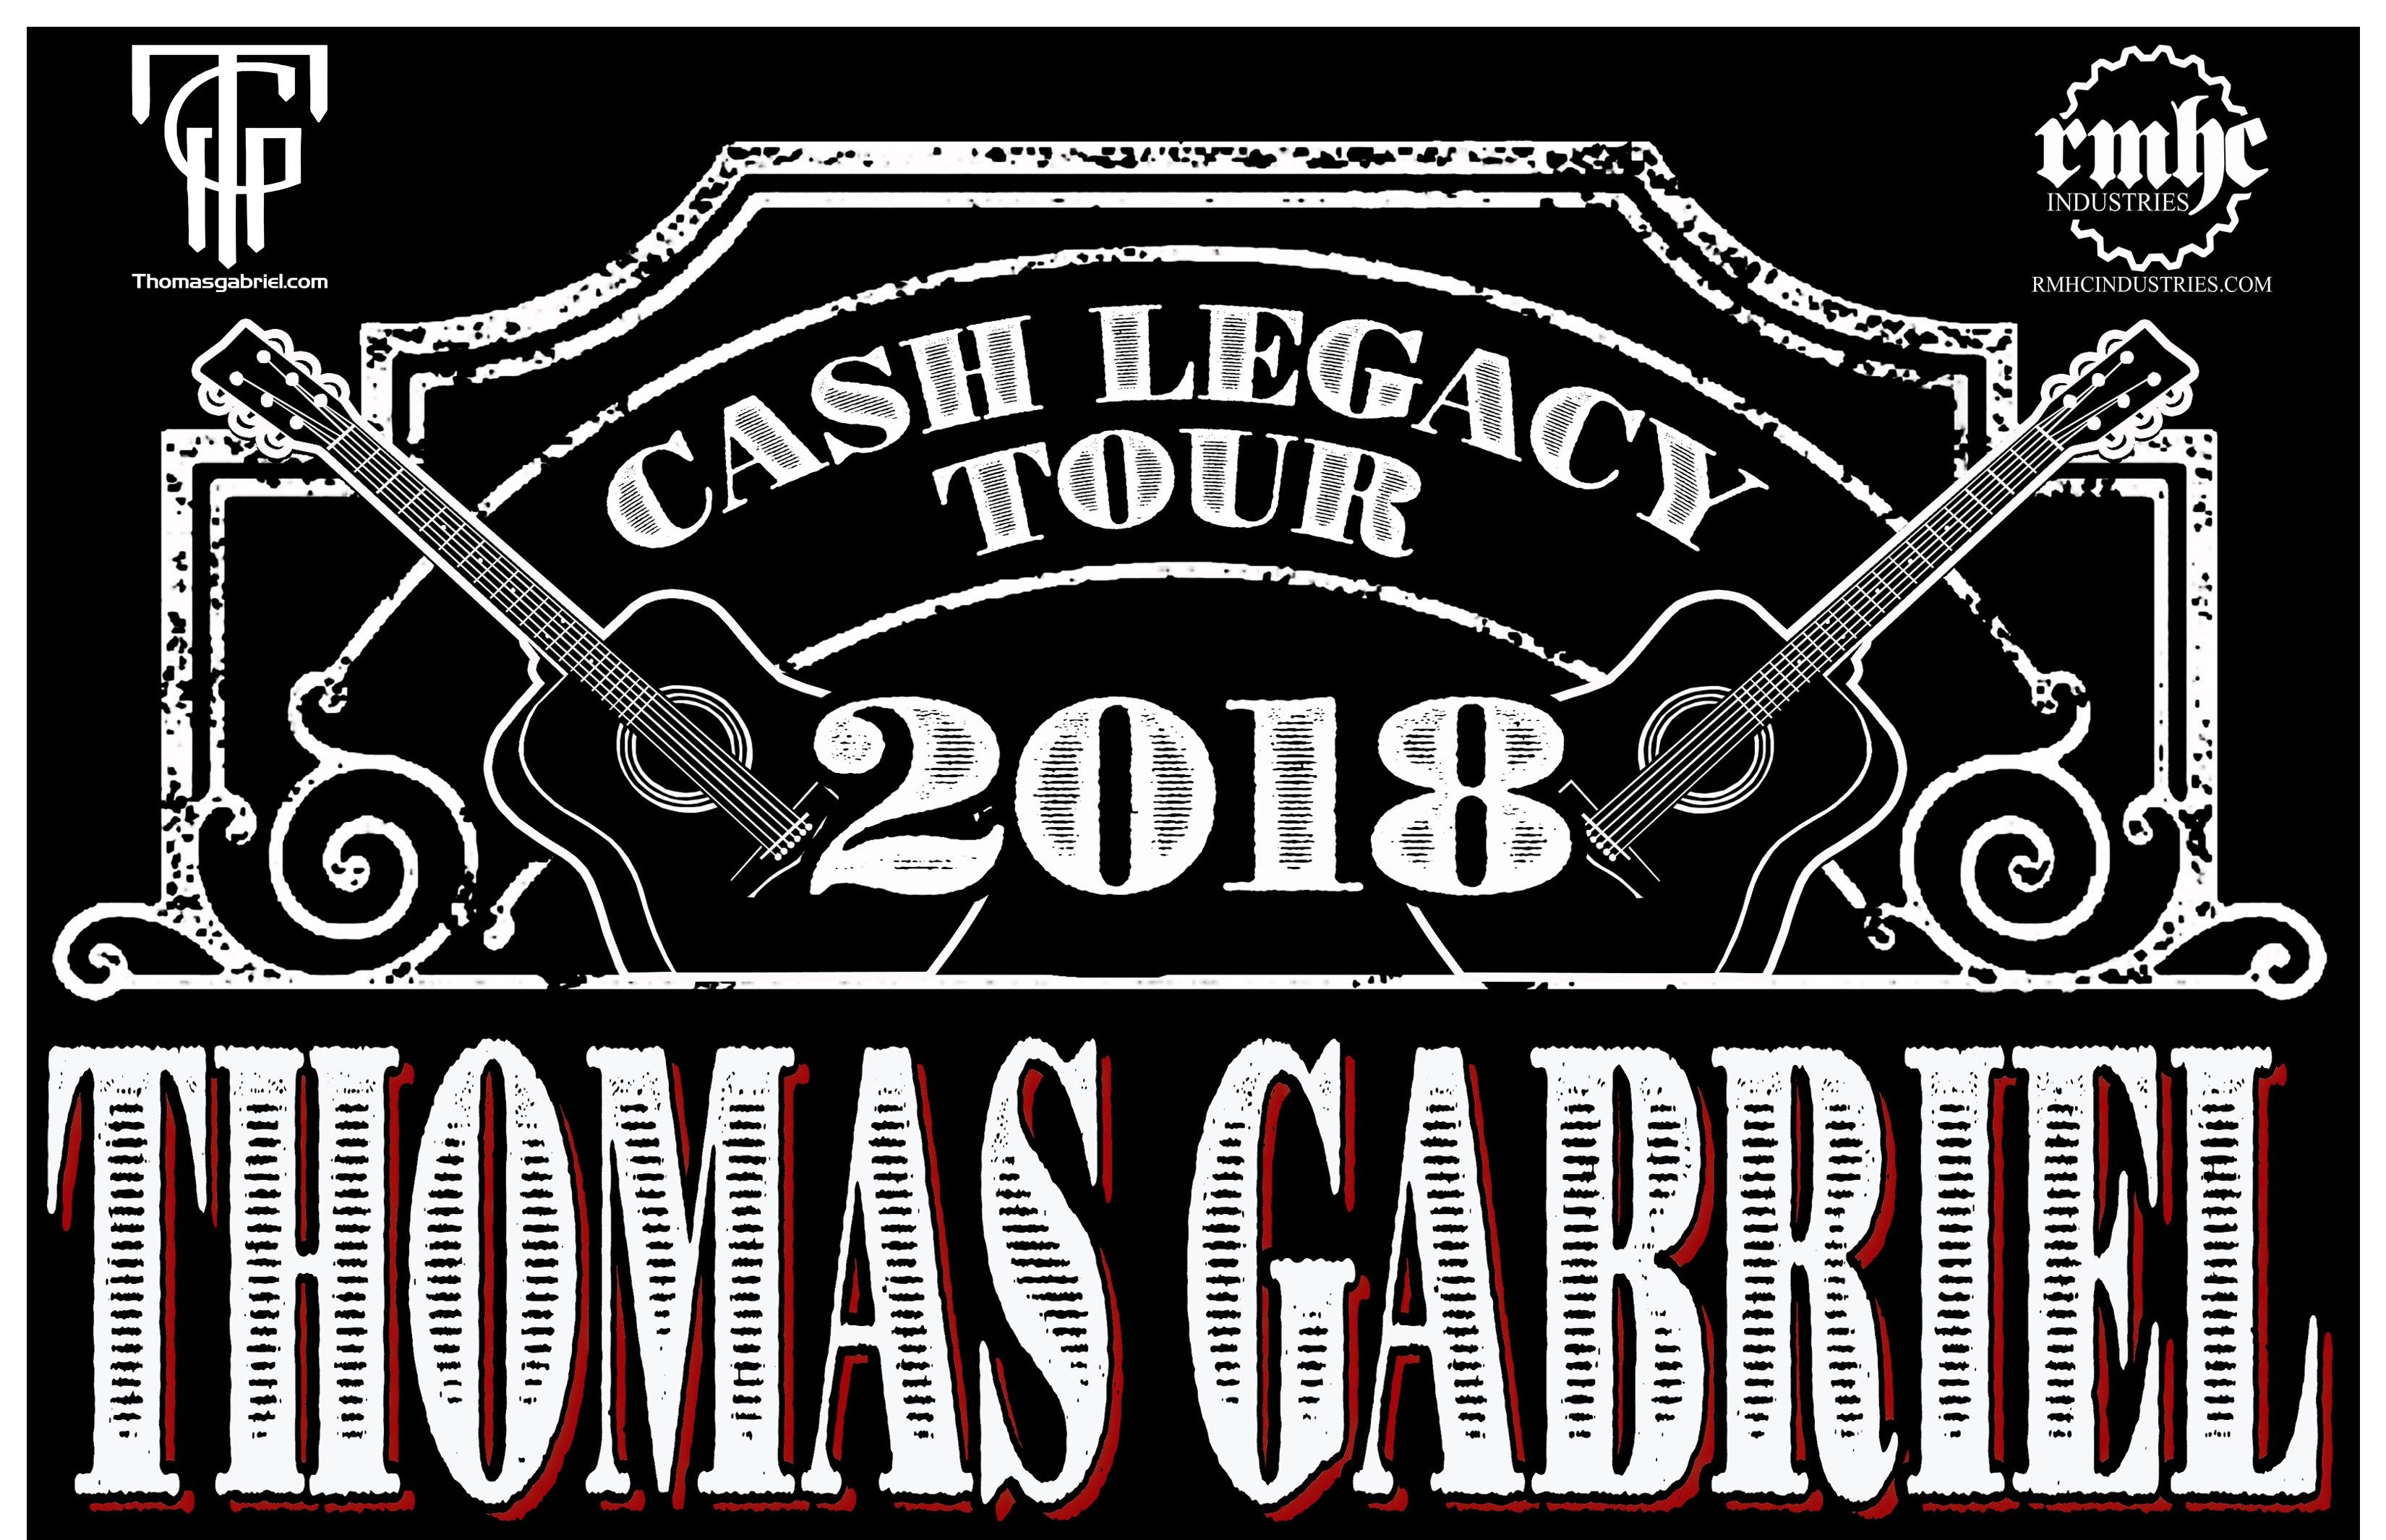 Thomas Gabriel Live in Concert! Harold's Cave Creek Corral